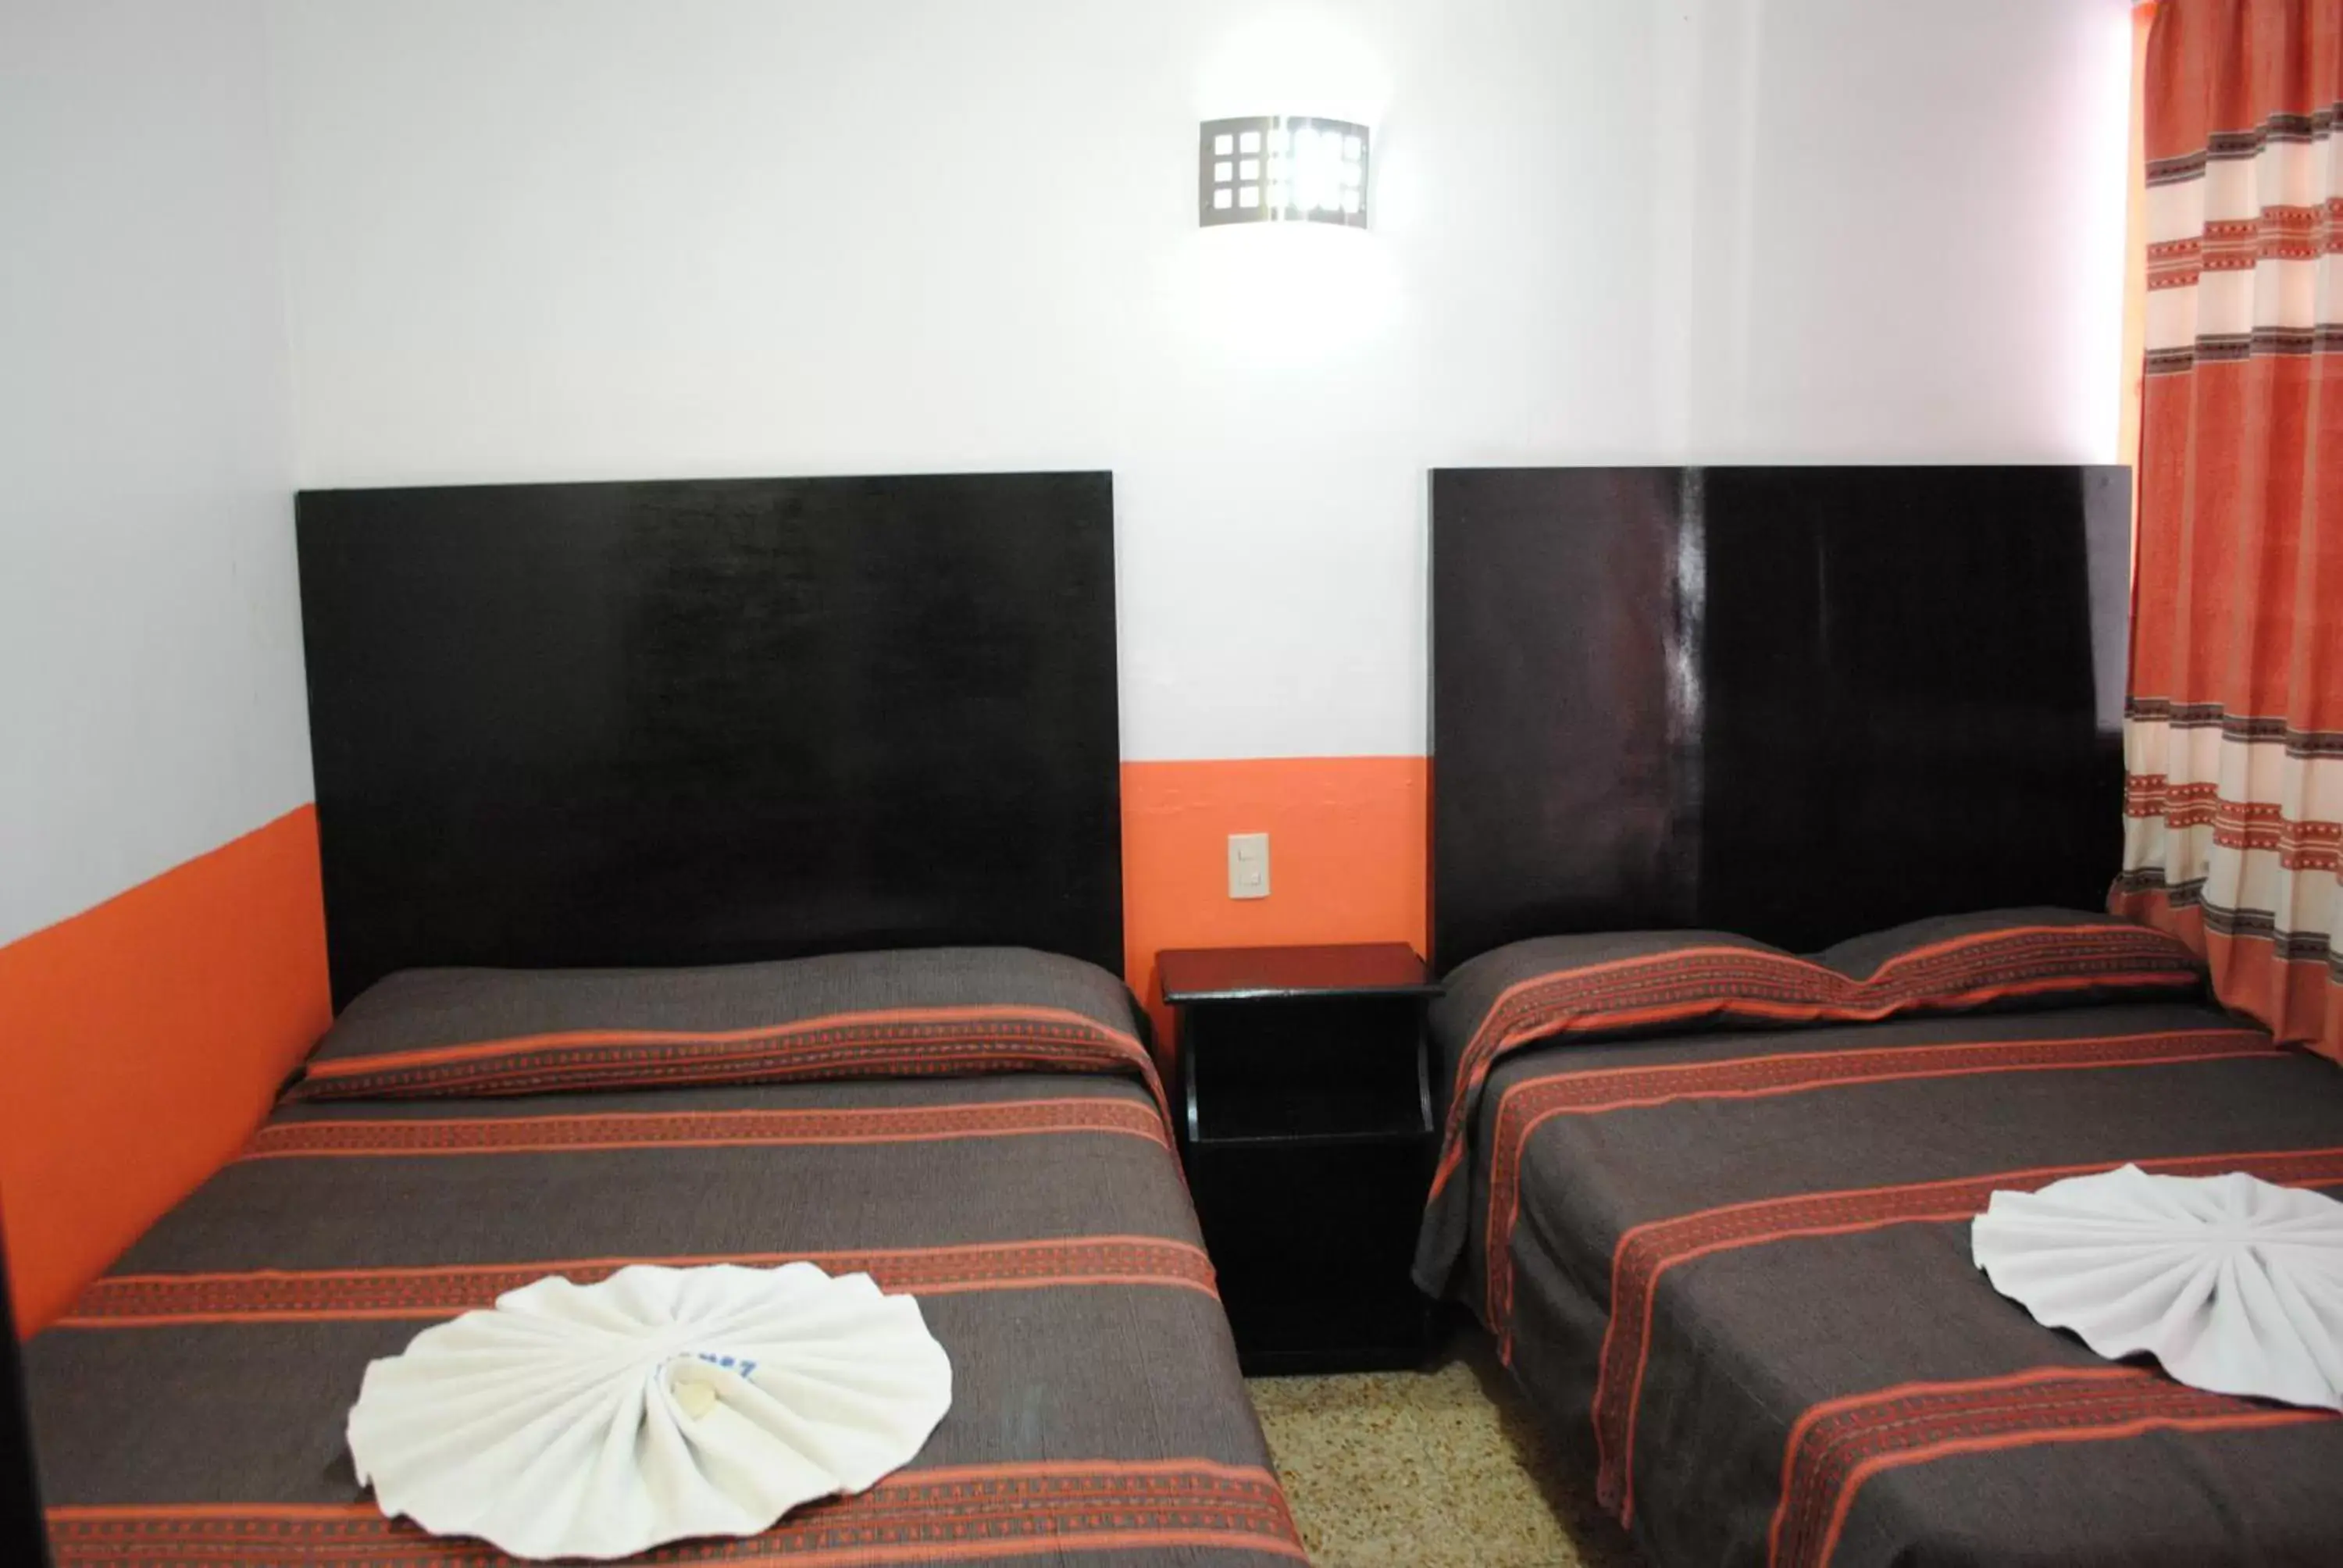 Bed, Room Photo in Hotel Jiménez